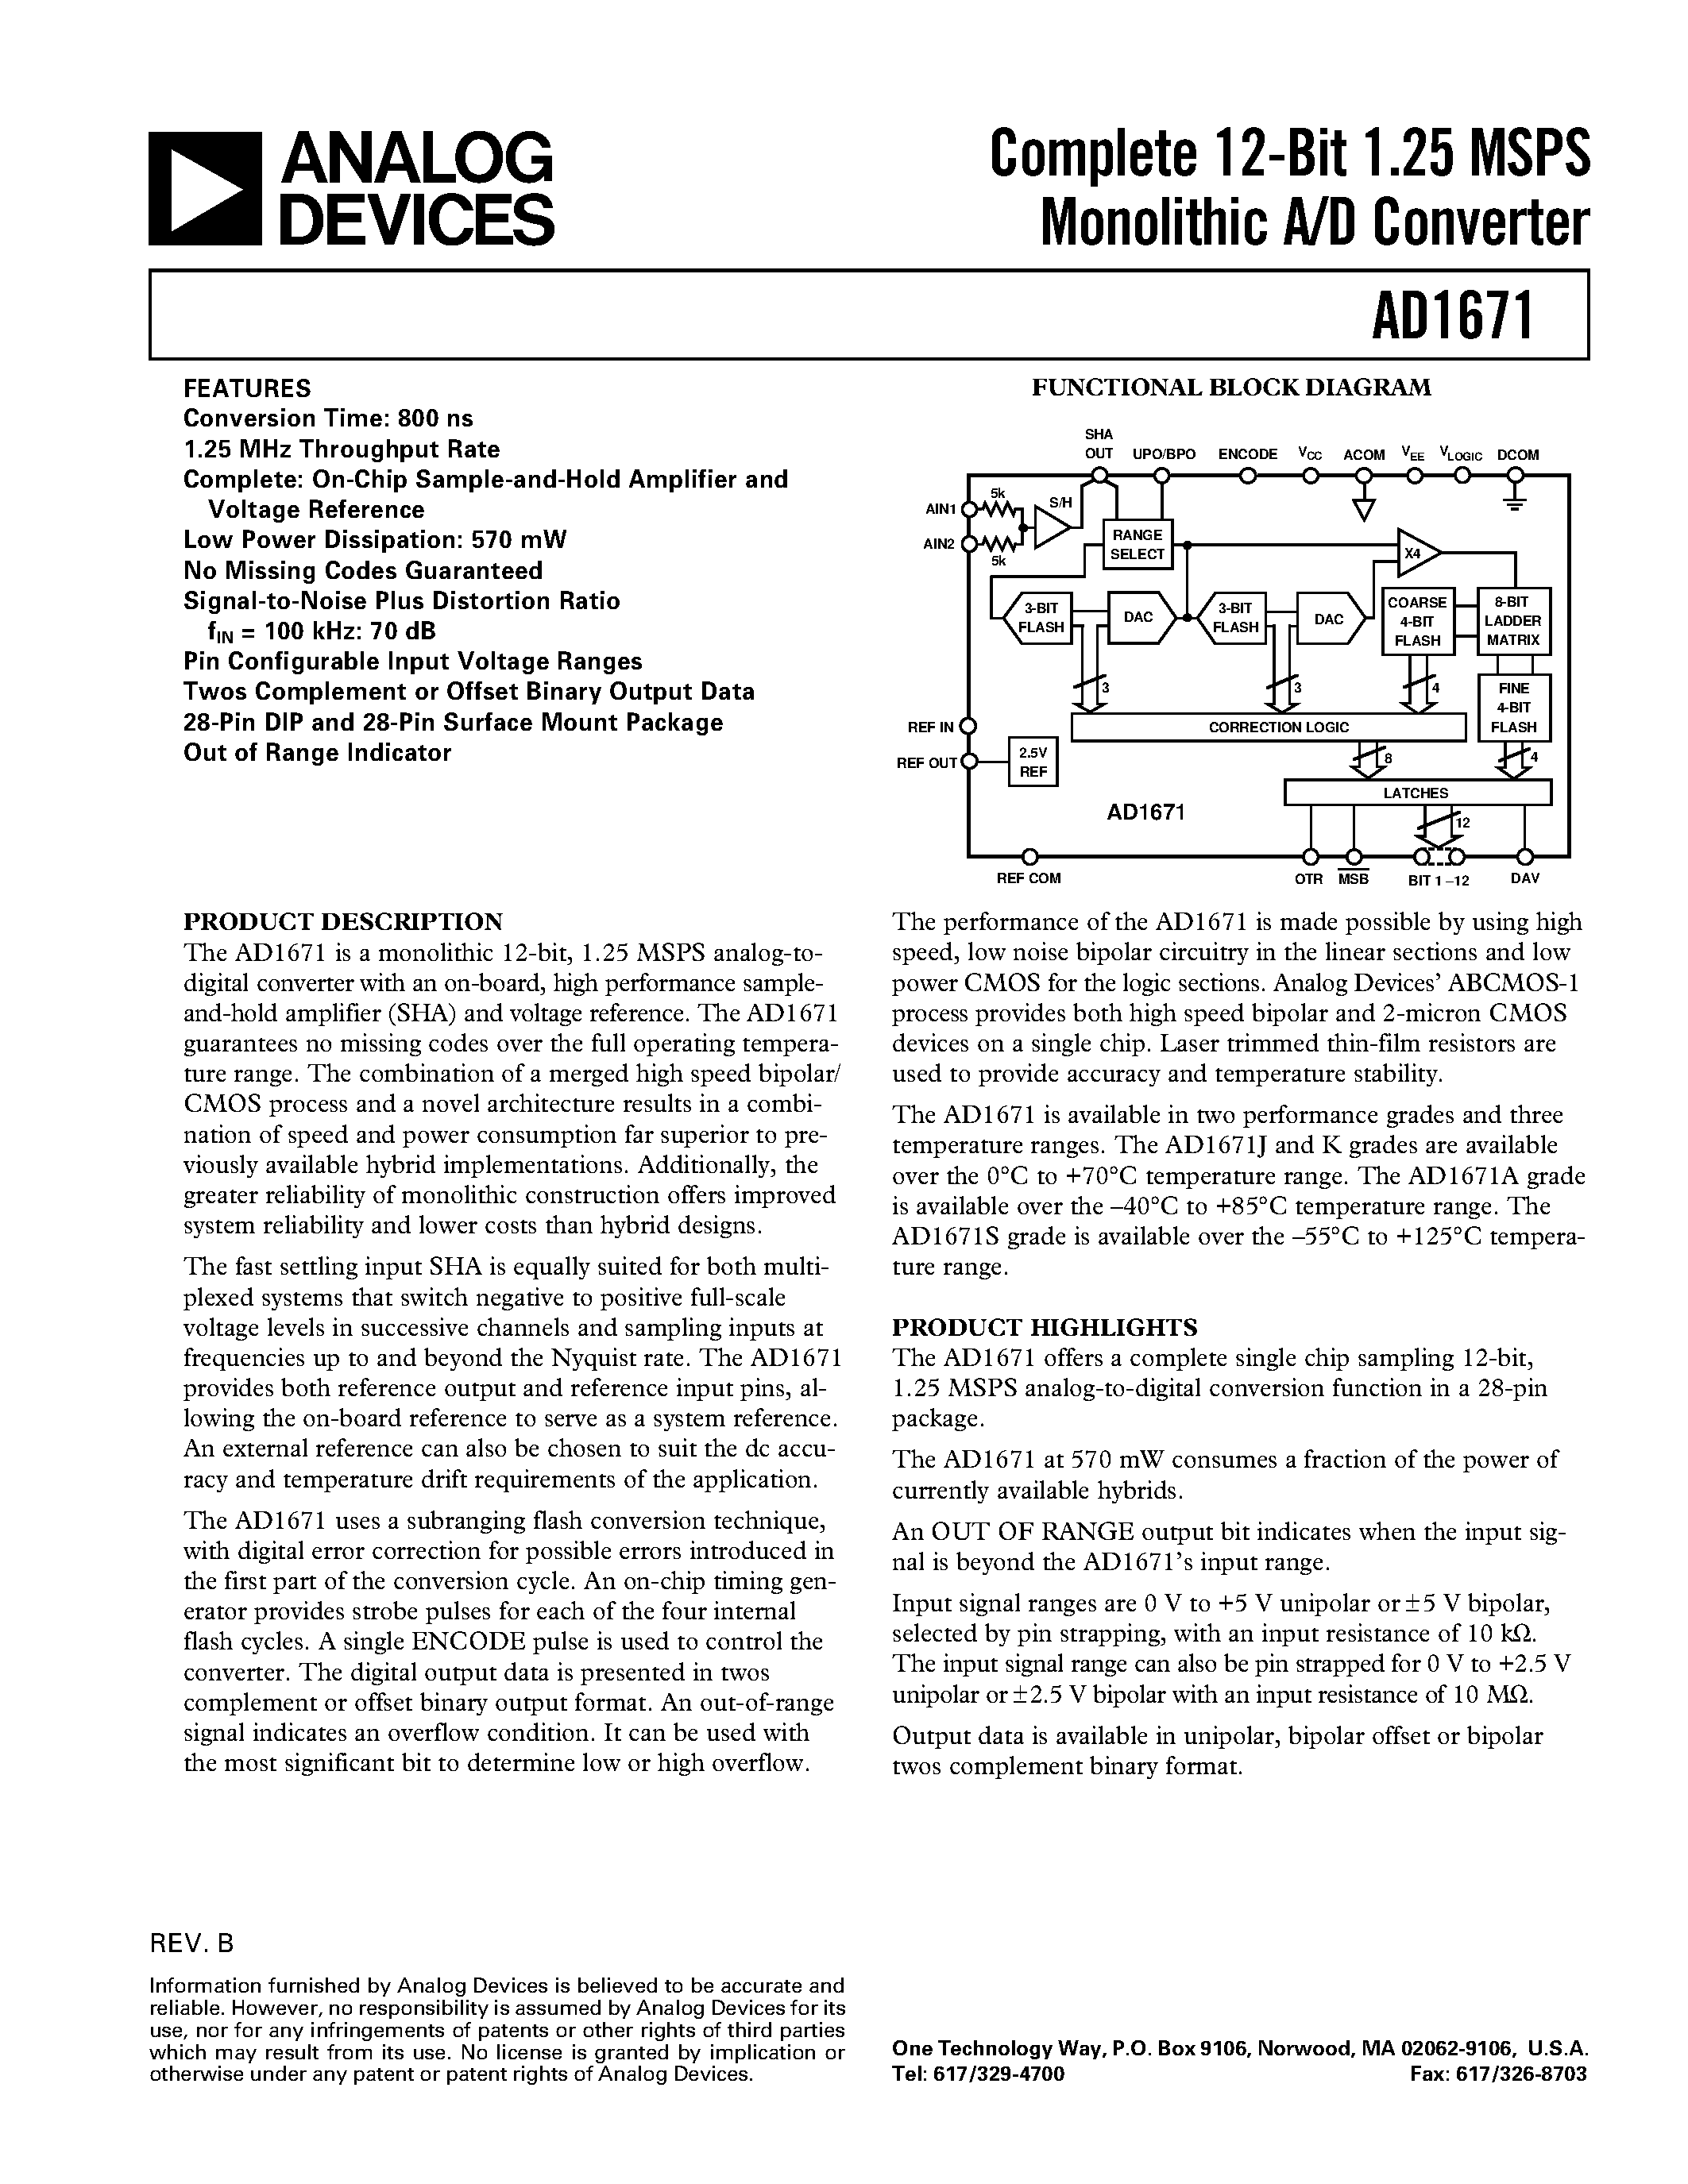 Datasheet AD1671JP - Complete 12-Bit 1.25 MSPS Monolithic A/D Converter page 1